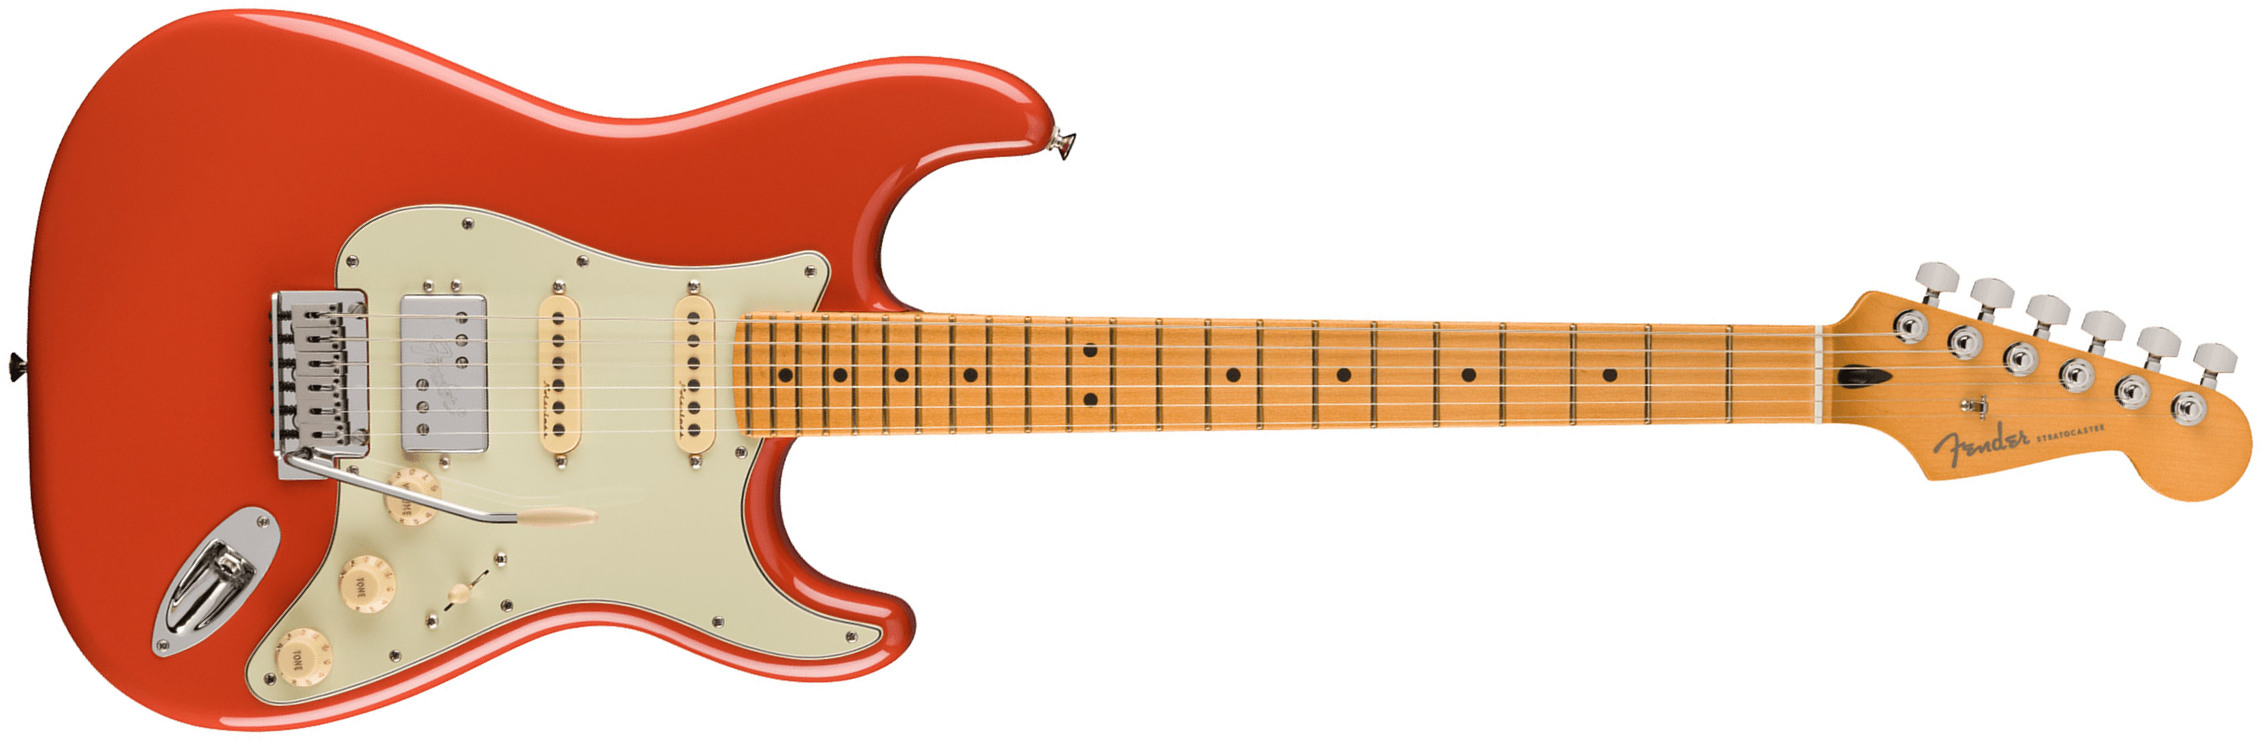 Fender Strat Player Plus Mex 2023 Hss Trem Mn - Fiesta Red - Str shape electric guitar - Main picture